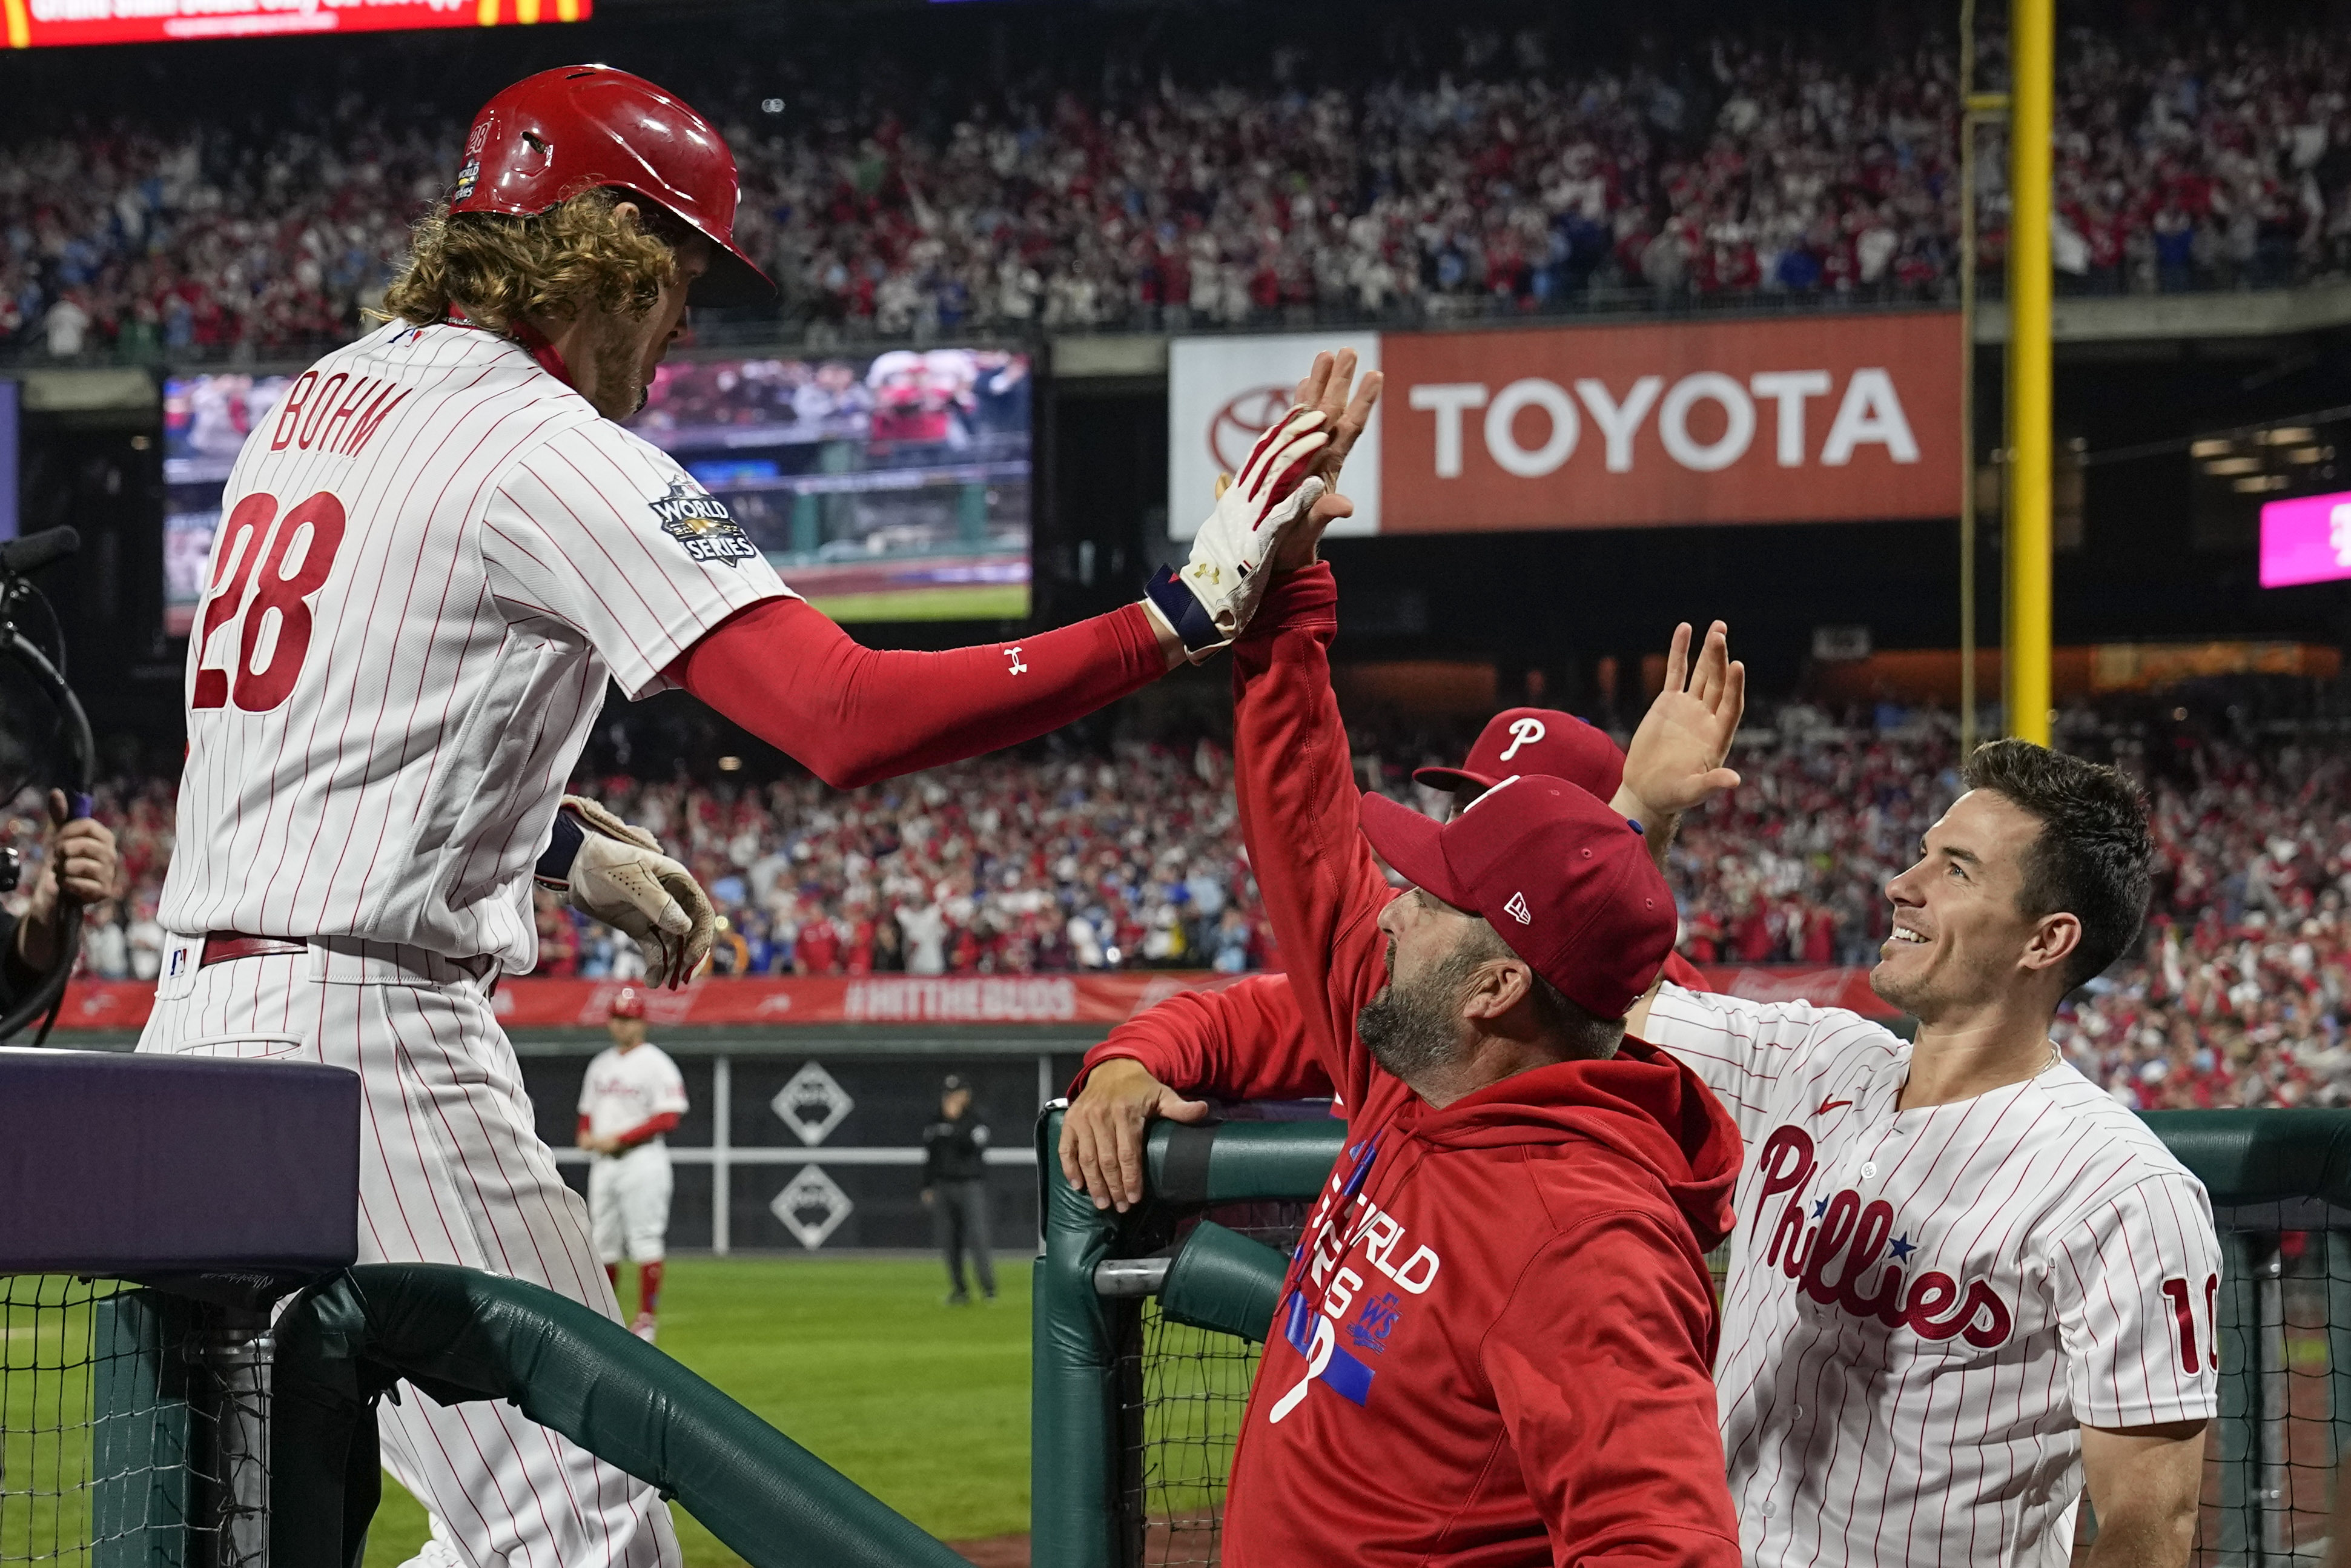 Harper, Phillies tie World Series mark with 5 HR, top Astros – KVEO-TV